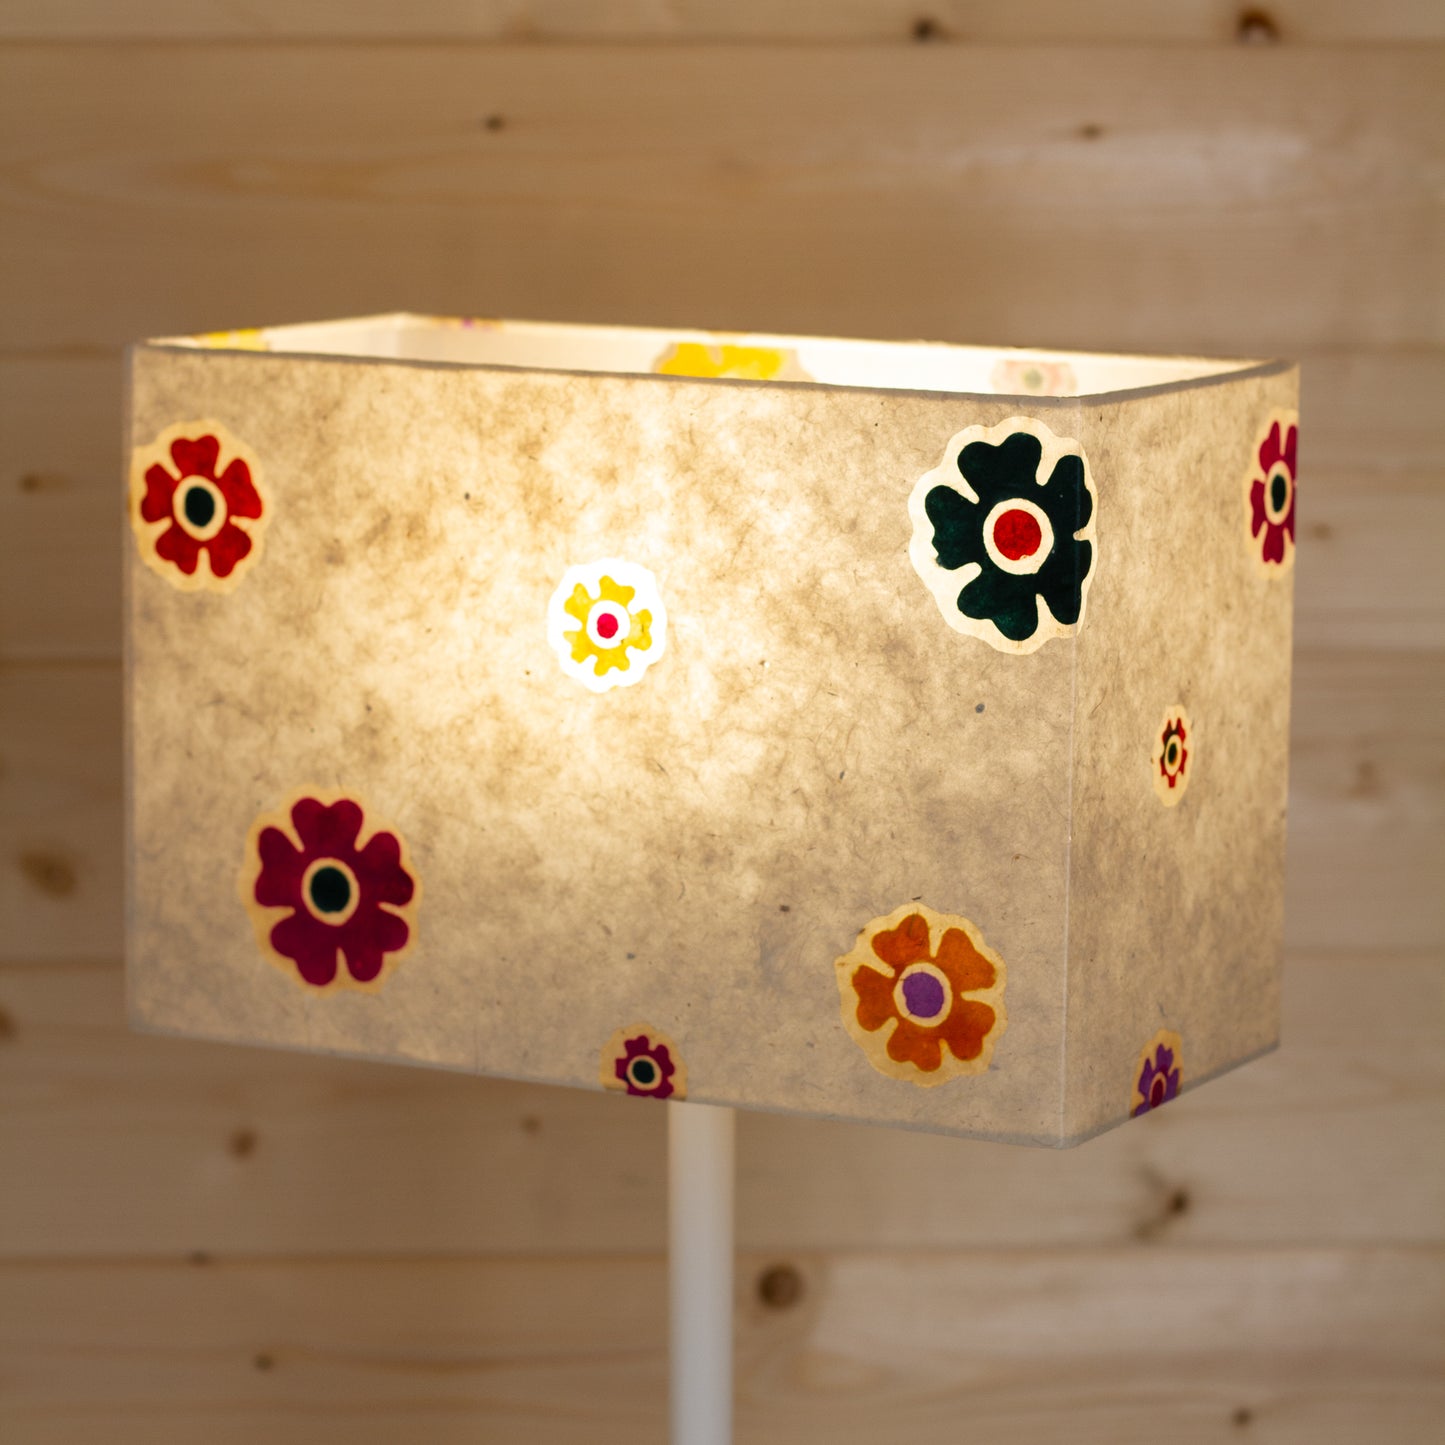 Rectangle Lamp Shade - P35 - Batik Multi Flower on Natural, 40cm(w) x 20cm(h) x 20cm(d)